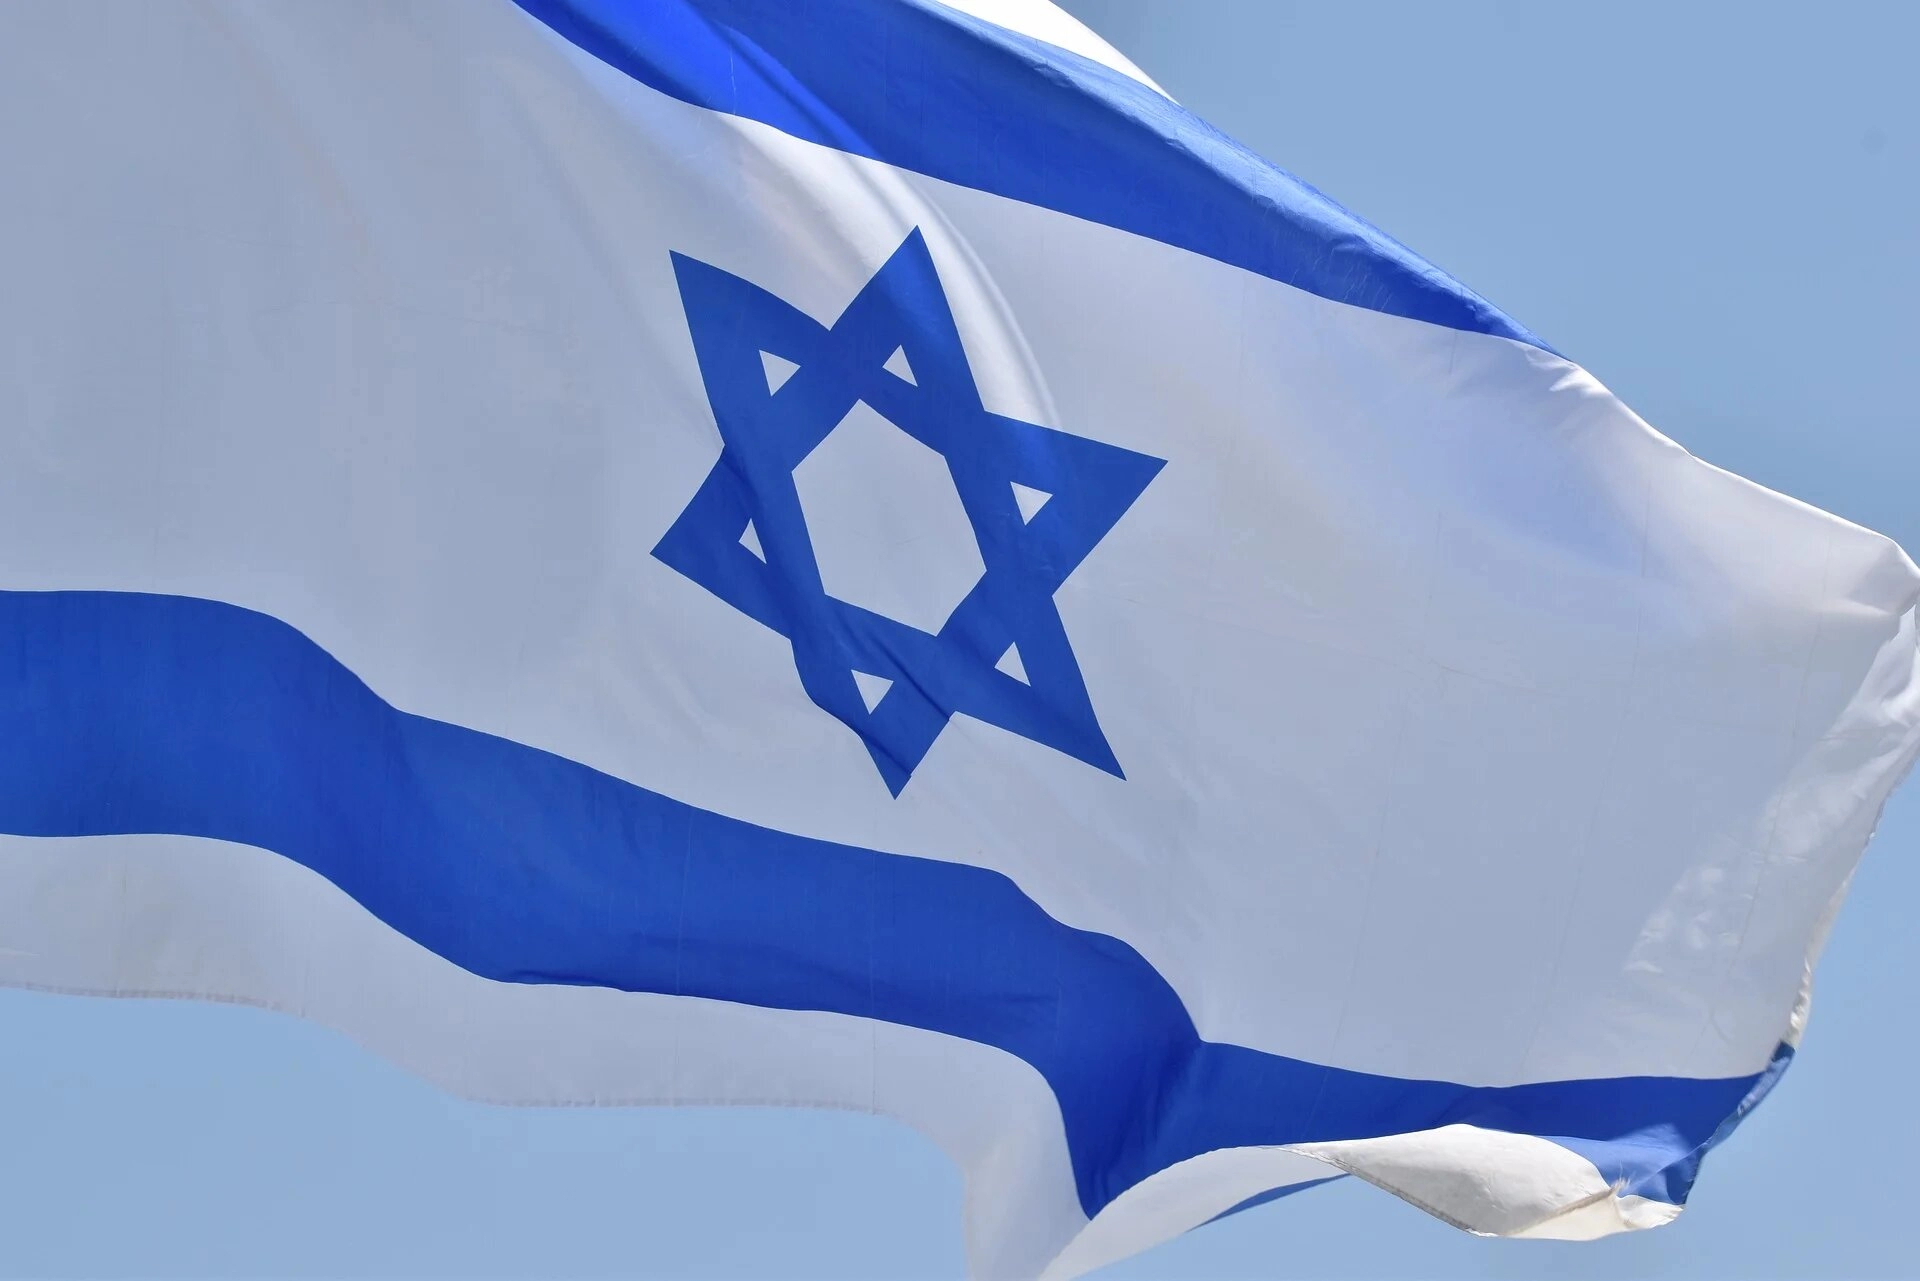 Izrael osudio slovensko priznanje Palestine: "Nagrada Hamasu za ubojstva i silovanja"